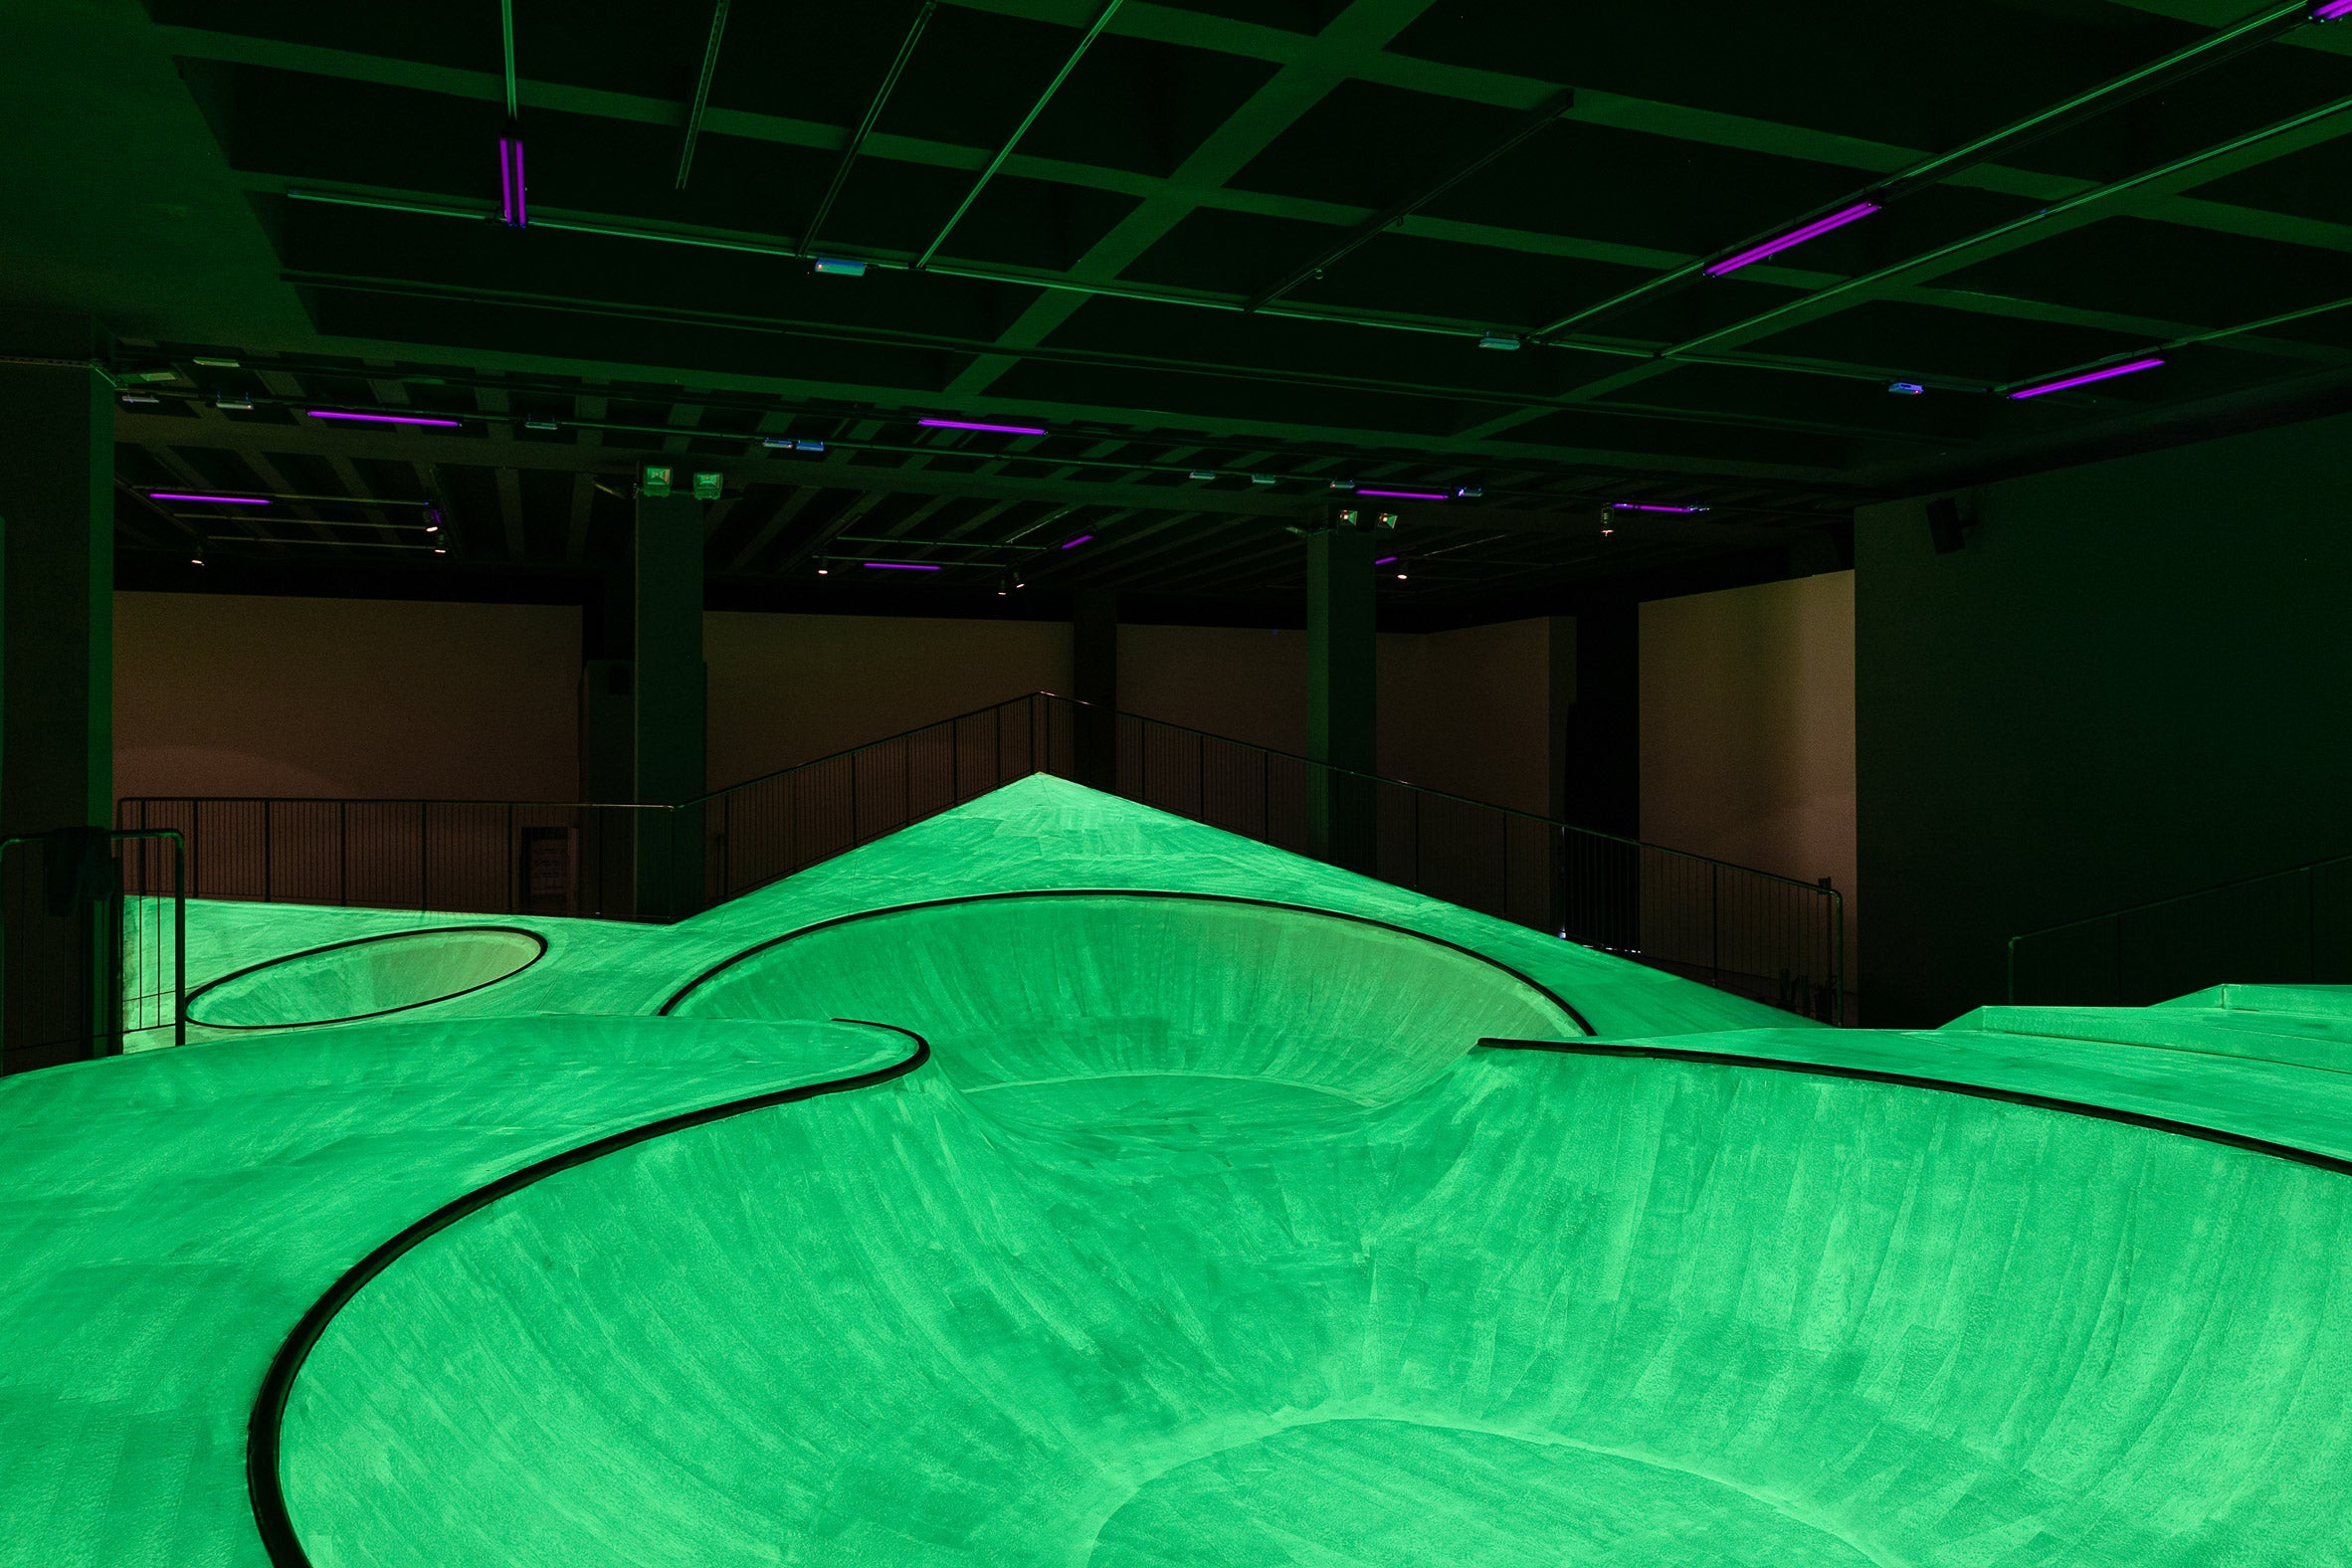 Glow-in-the-dark skatepark created inside Triennale Milano by Koo Jeong A